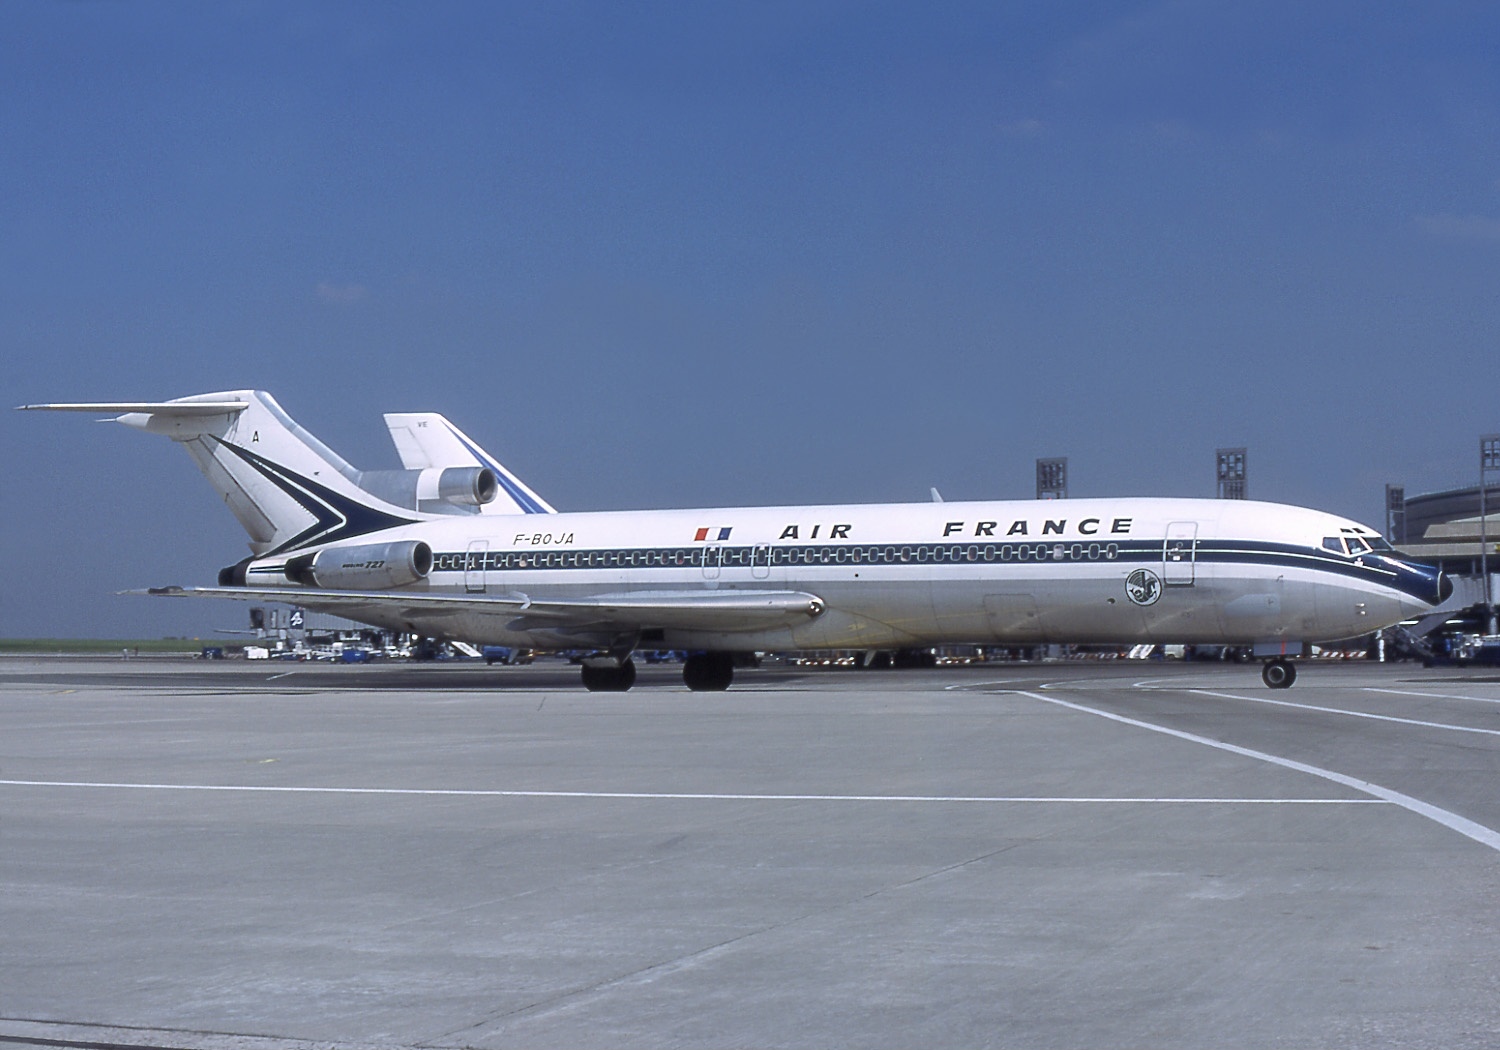 https://upload.wikimedia.org/wikipedia/commons/5/5f/Boeing_727-228%2C_Air_France_AN0600190.jpg